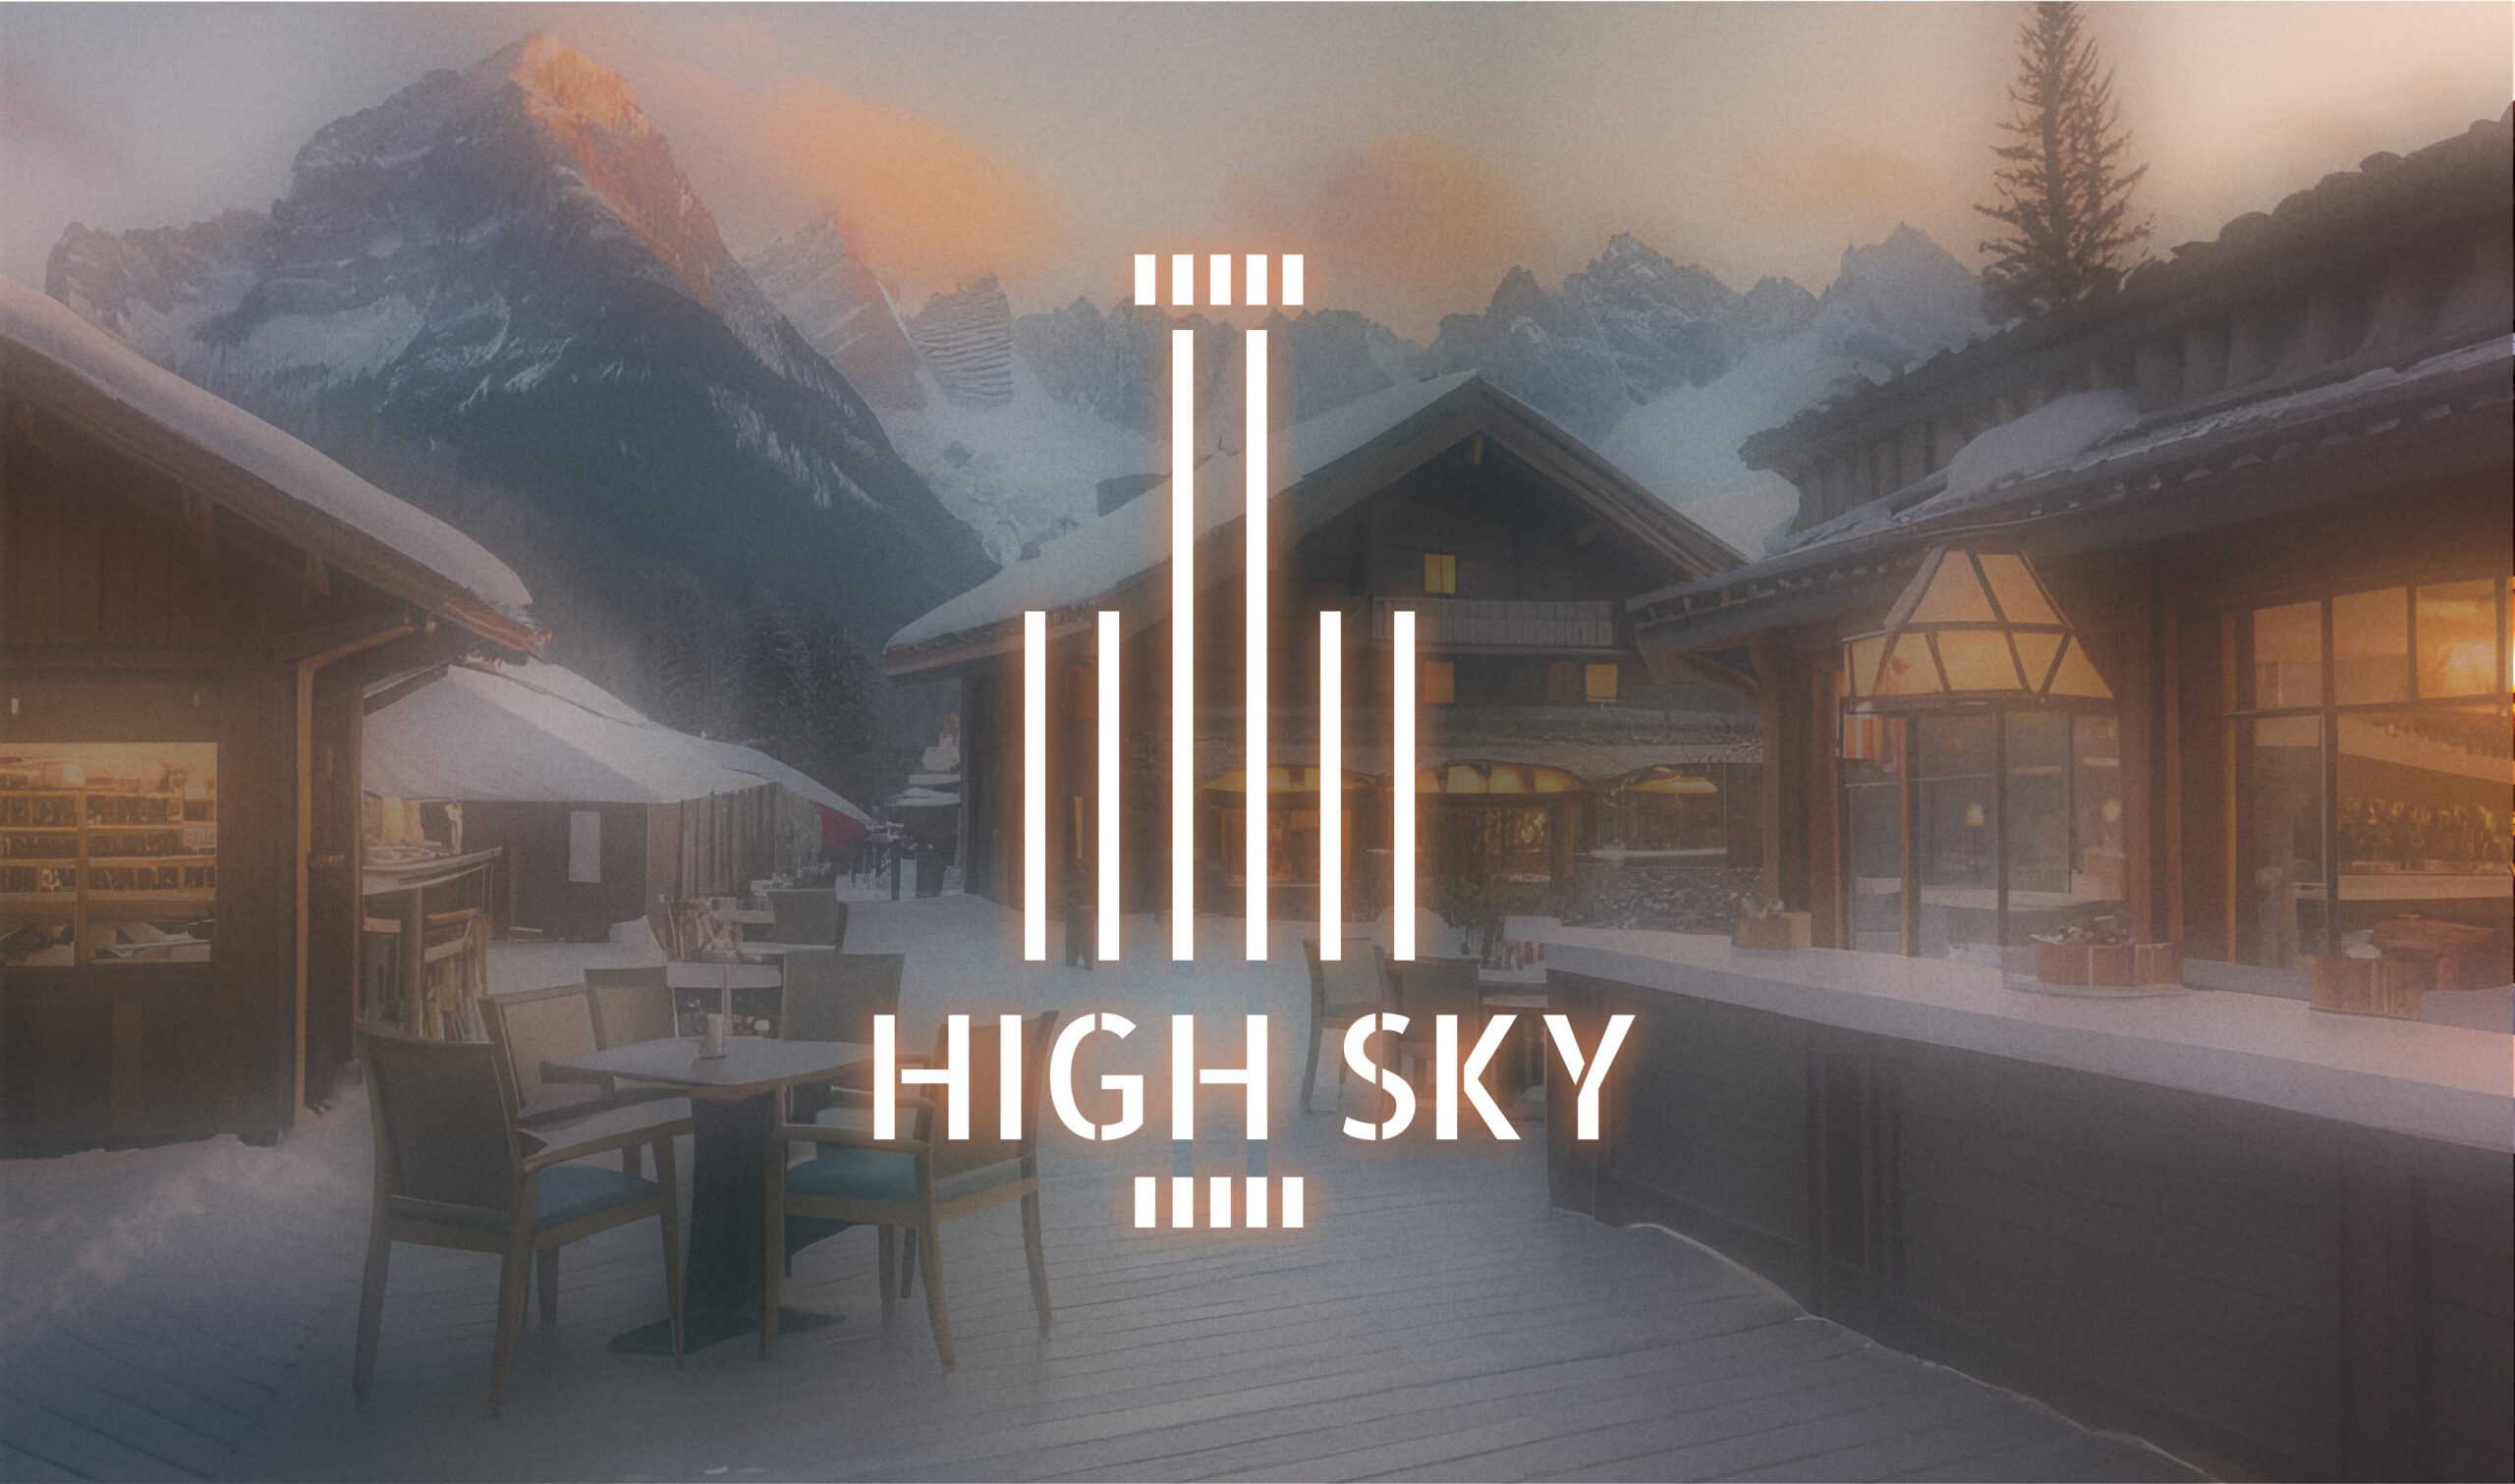 Hotel “High Sky”